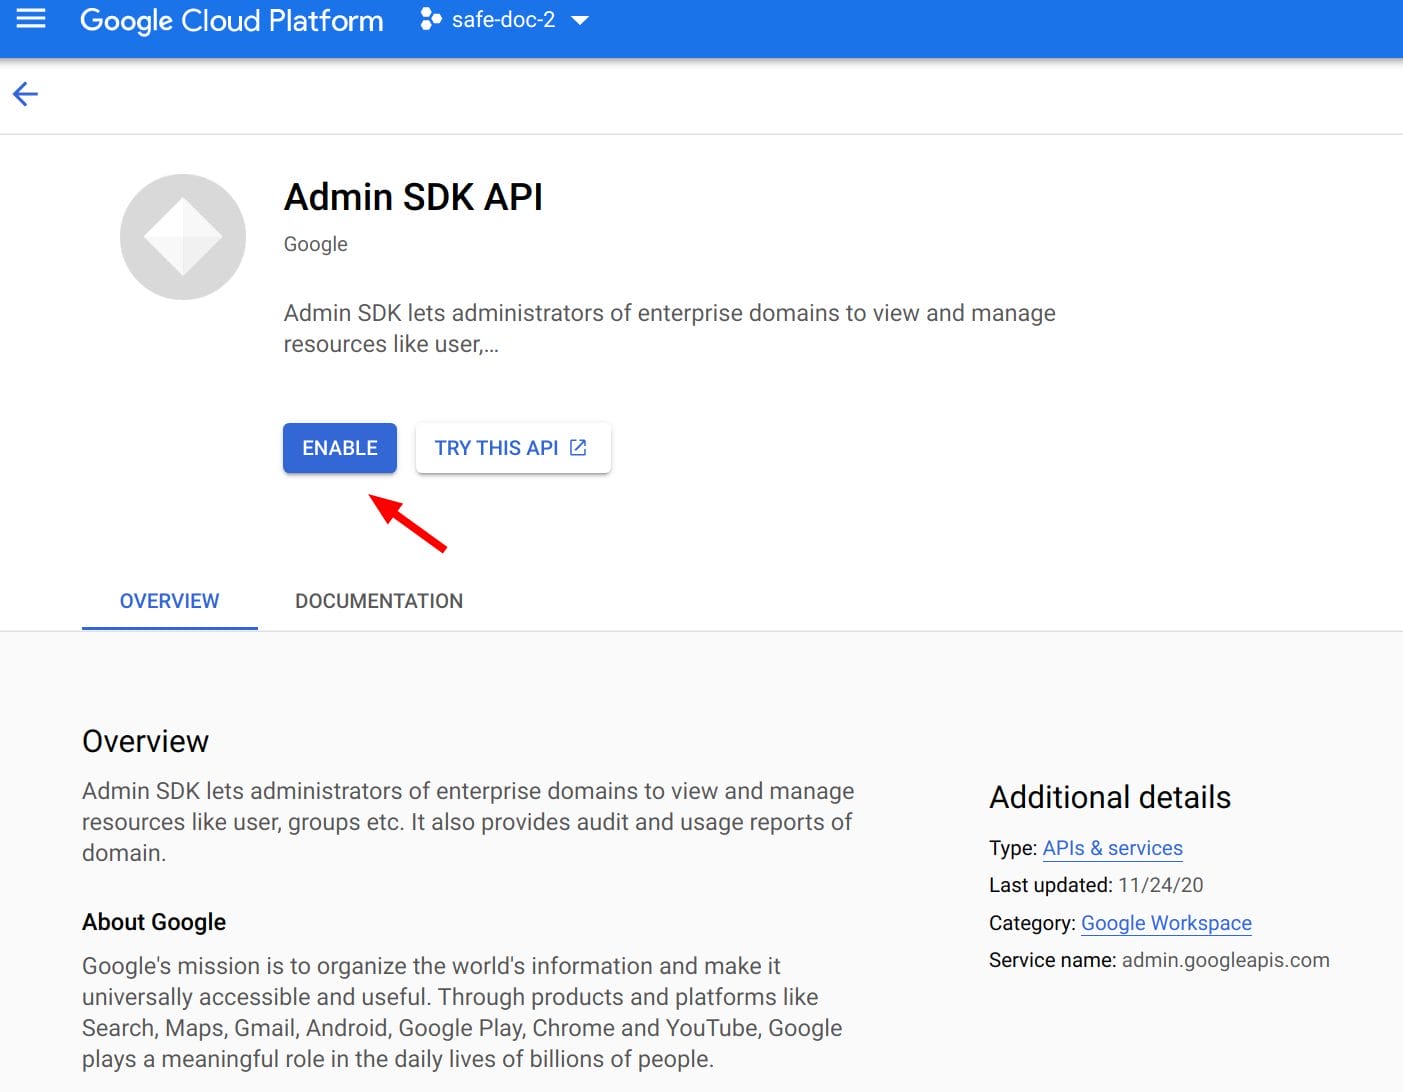 Enable Admin SDK API in GCP